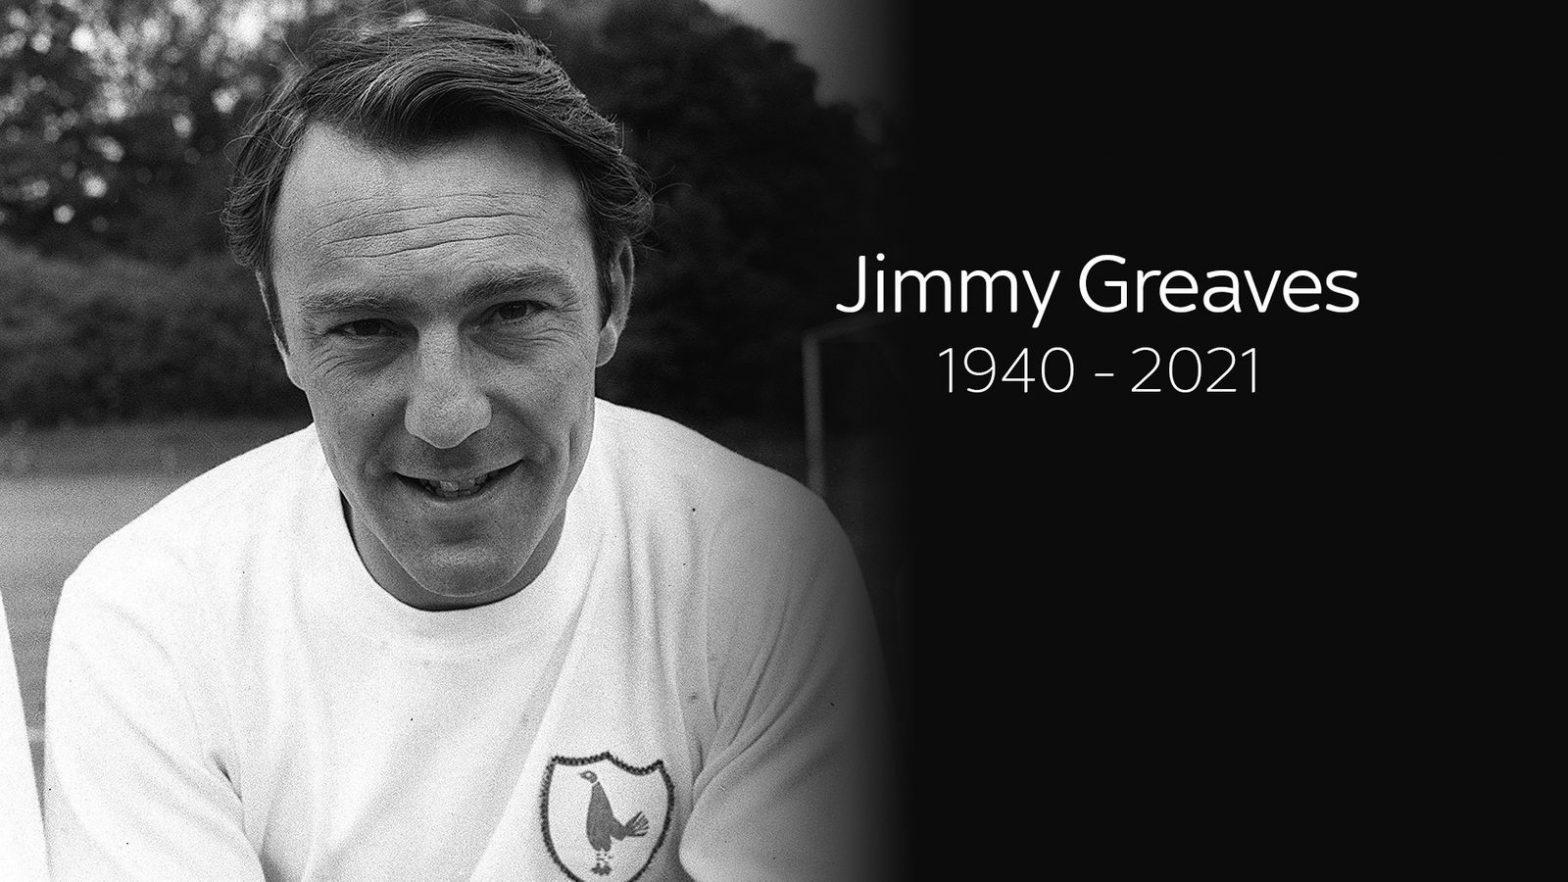 Former England Footballer Jimmy Greaves passes away